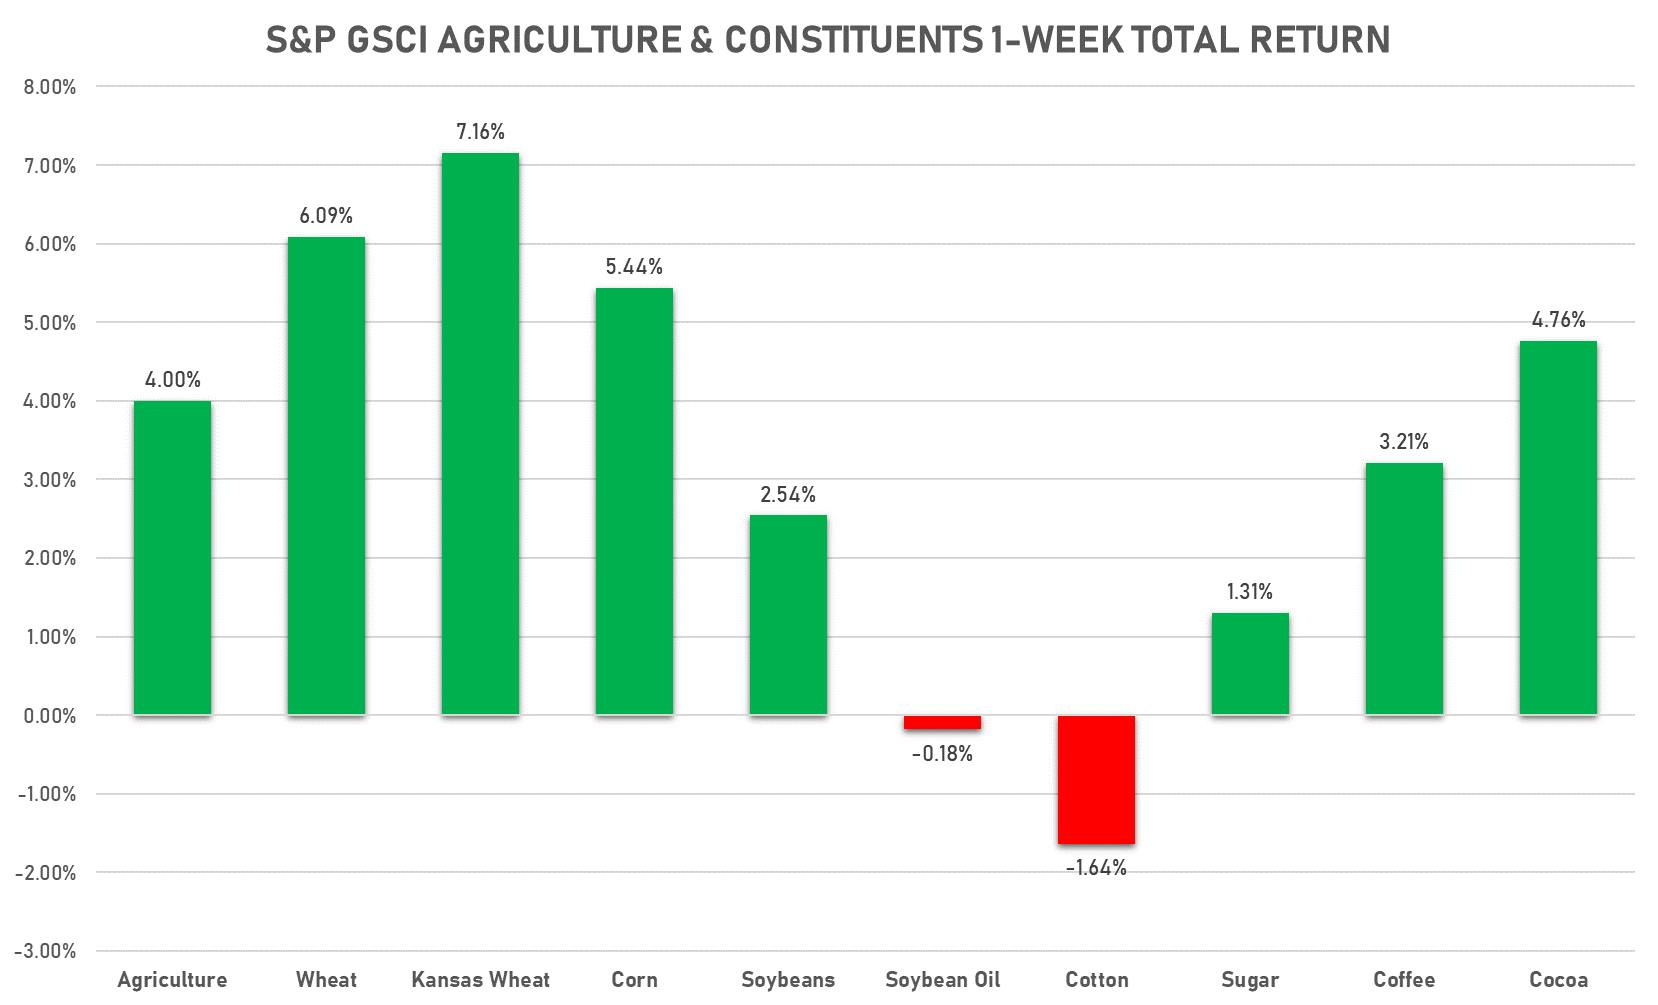 GSCI Agriculture | Sources: phipost.com, FactSet data